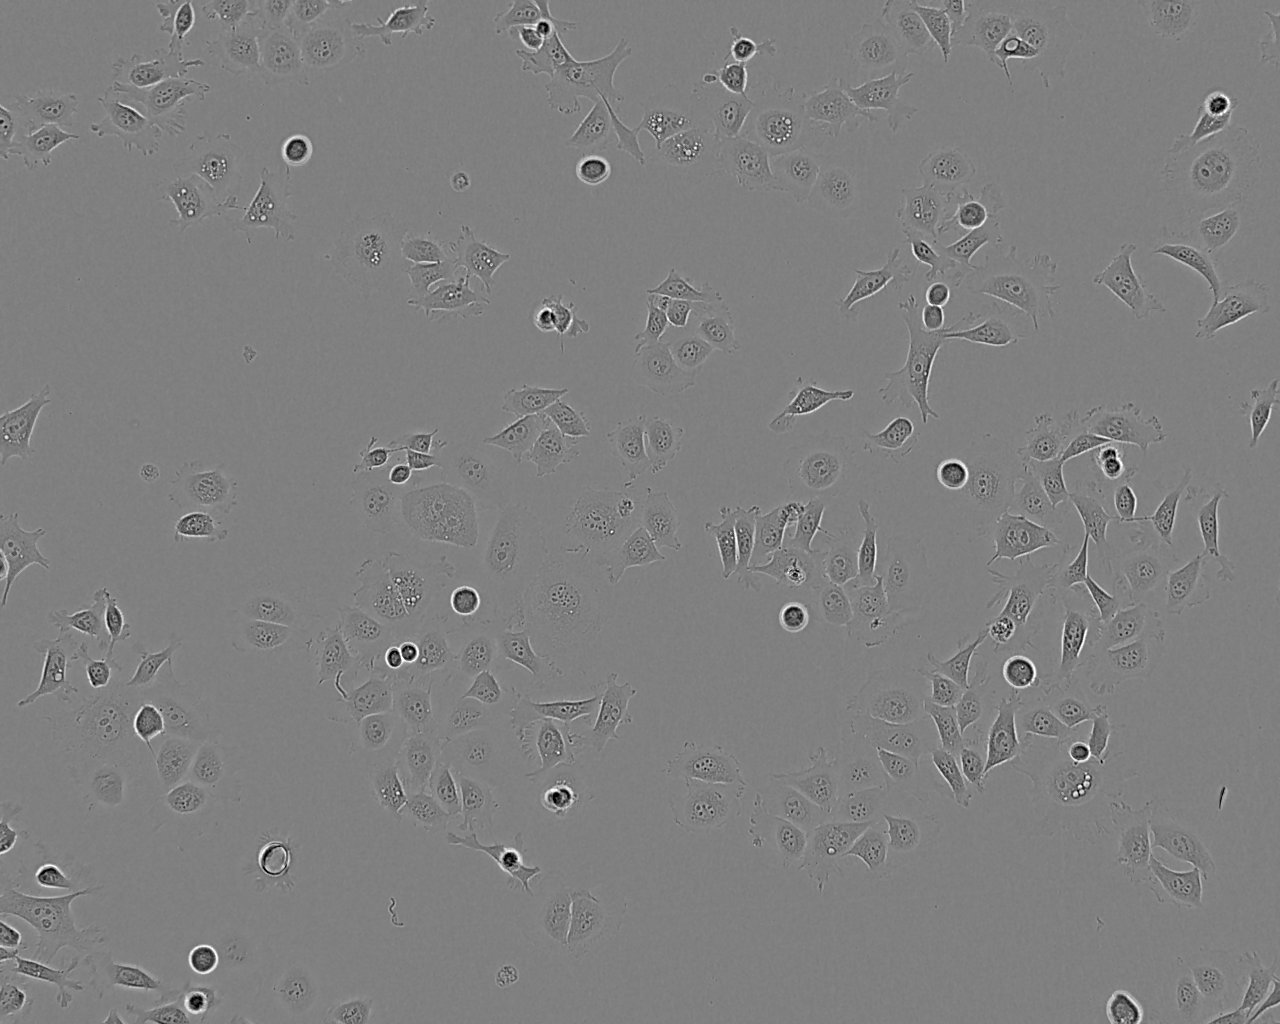 NGP epithelioid cells人神经母细胞系,NGP epithelioid cells